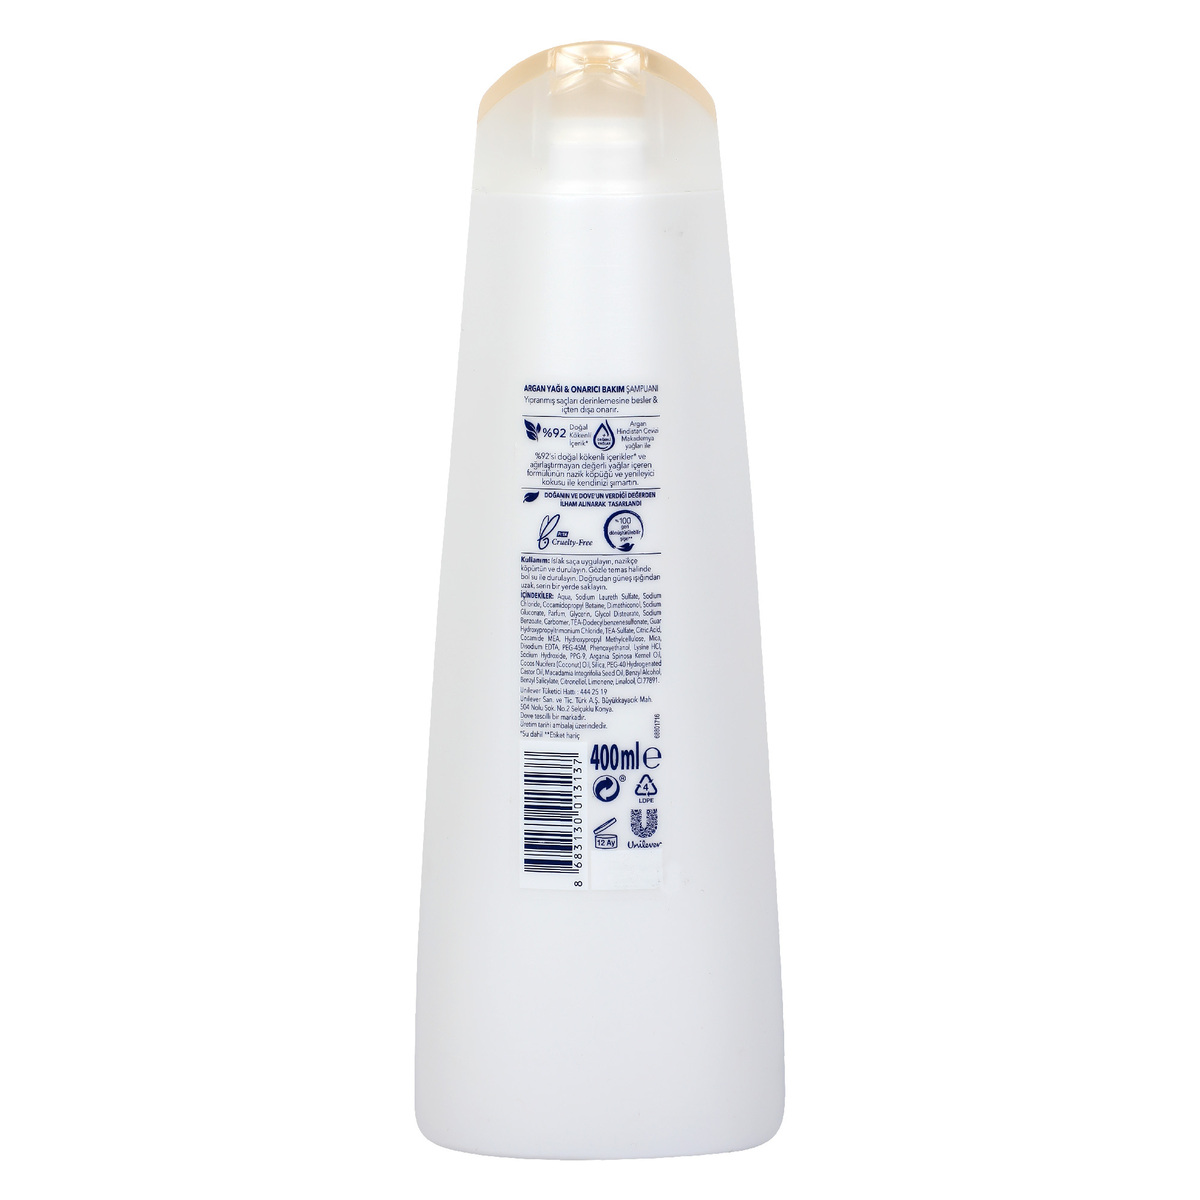 Dove Shampoo Damaged Repair Argan Oil, 400 ml